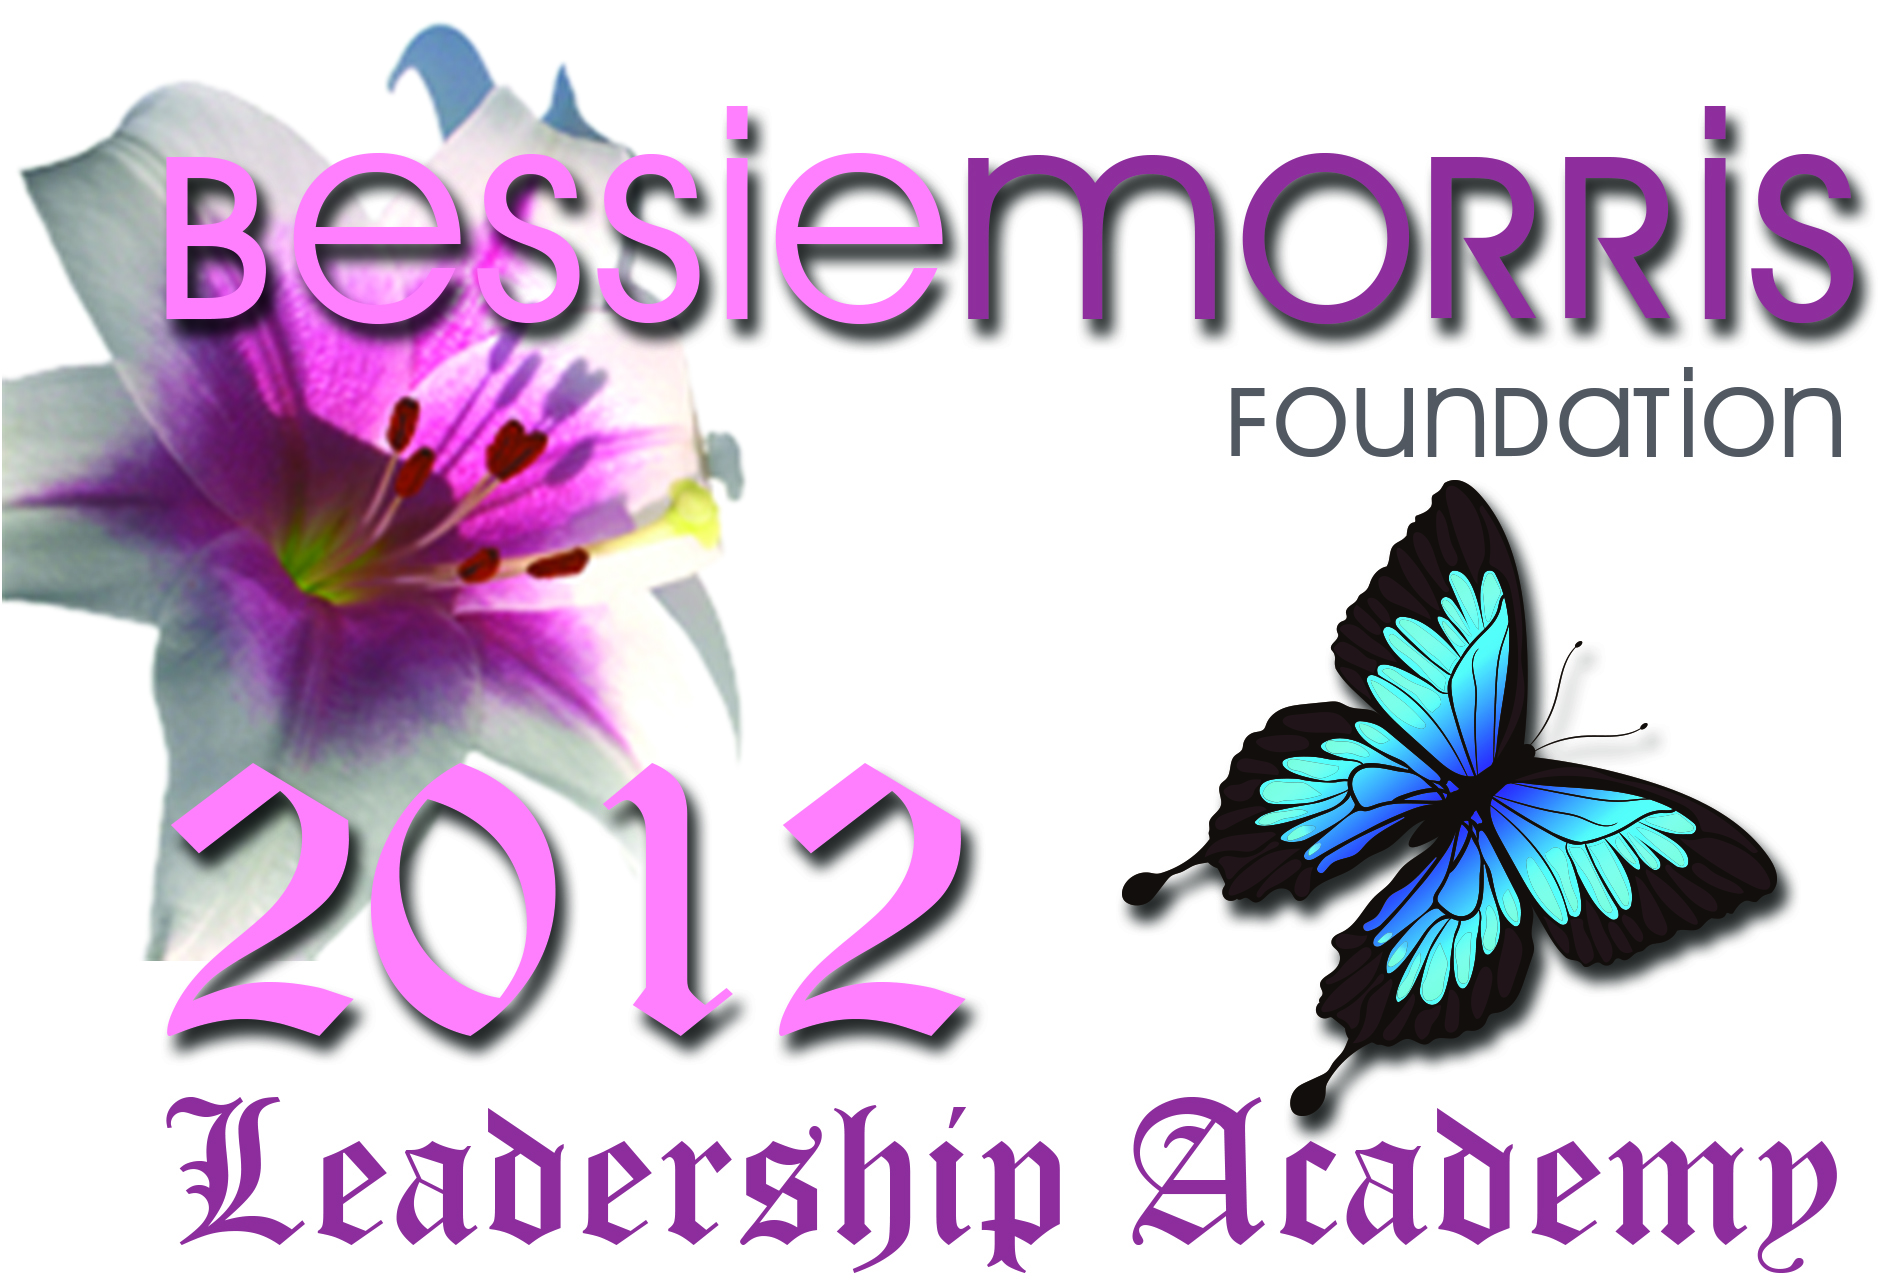 2017 Bessie Morris Foundation Leadership Academy